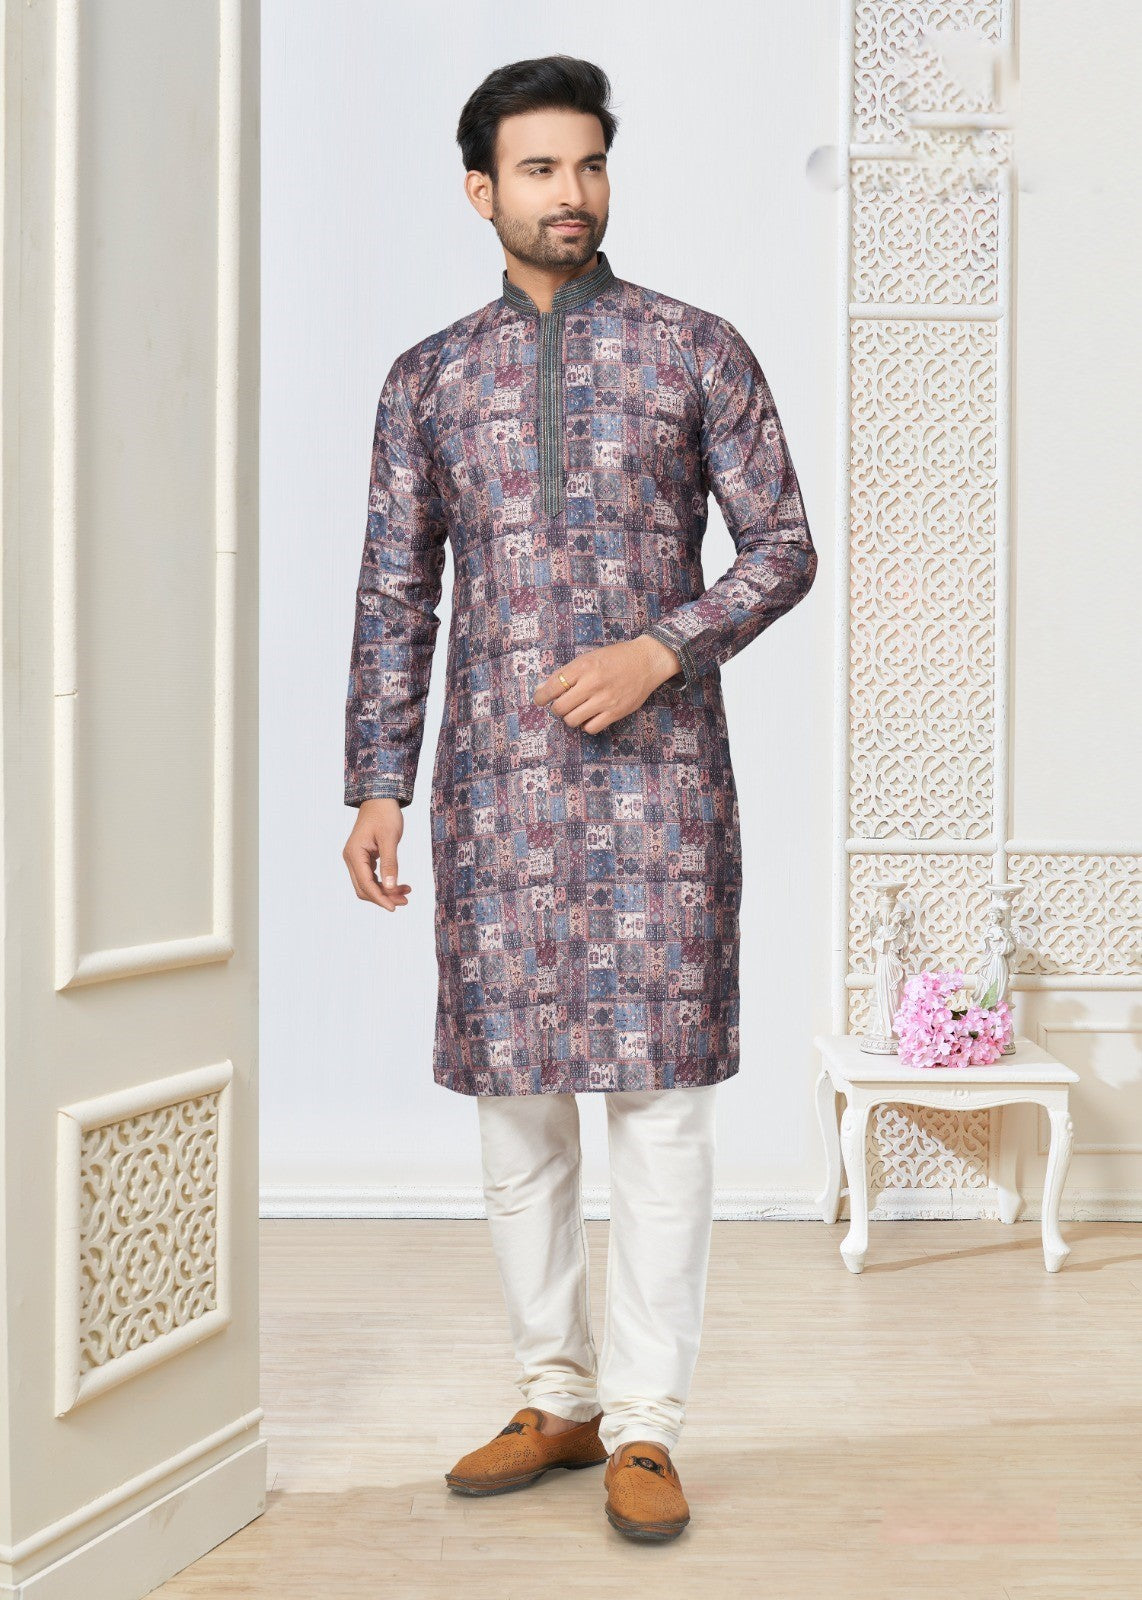 Men Wear Cotton Kurta and Pajama for Wedding